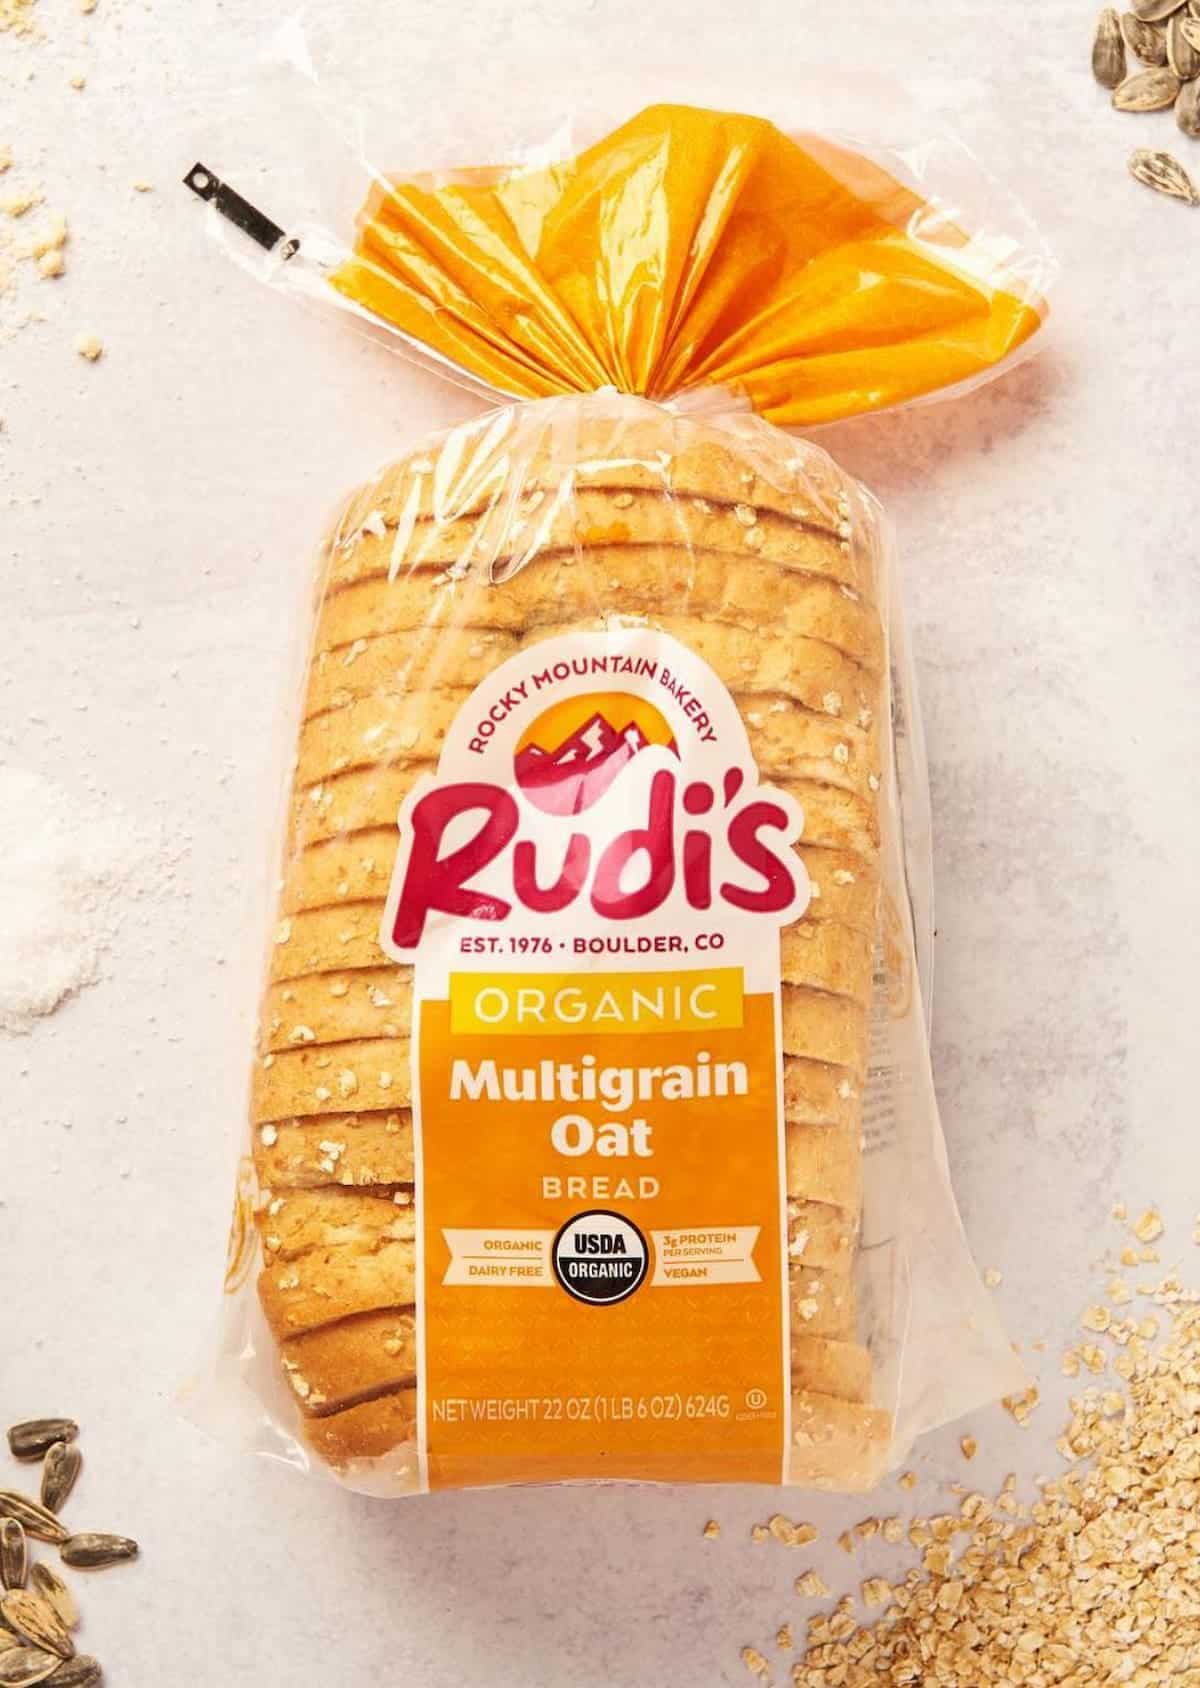 A package of Rudi's vegan, organic bread.